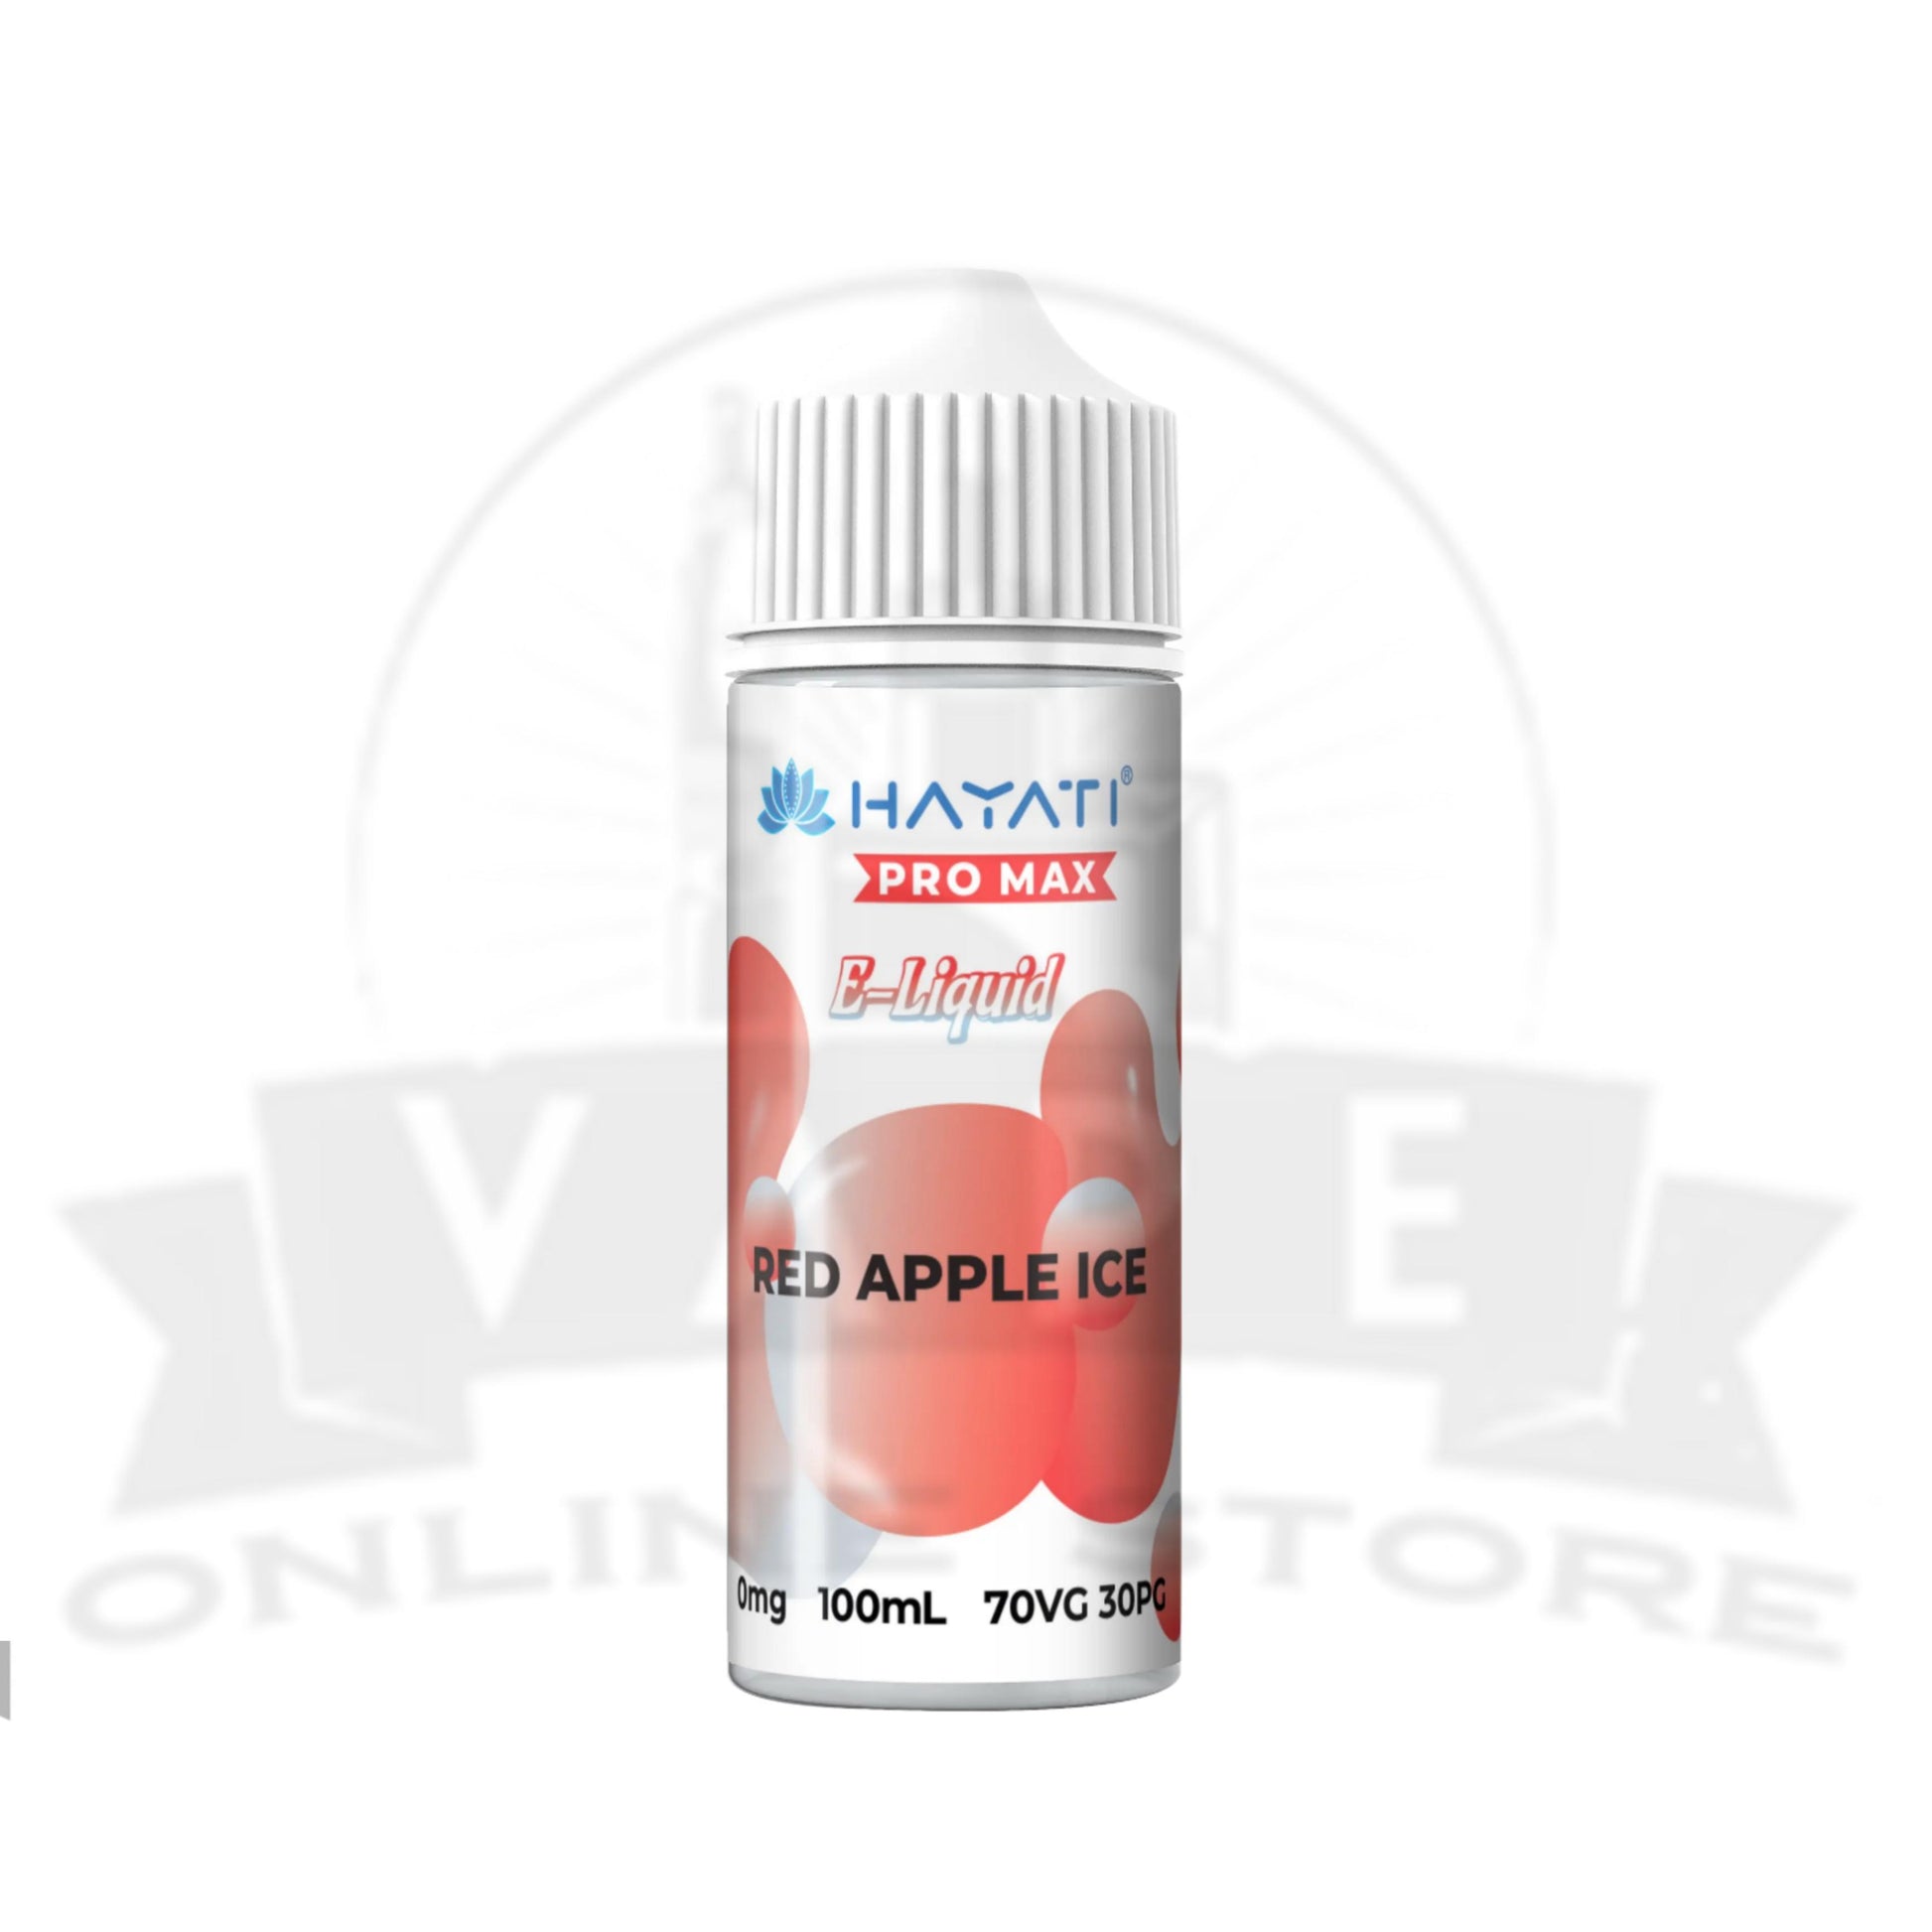 Red Apple Ice Hayati Pro Max 100ml E-Liquid Vape Juice | Full Stock